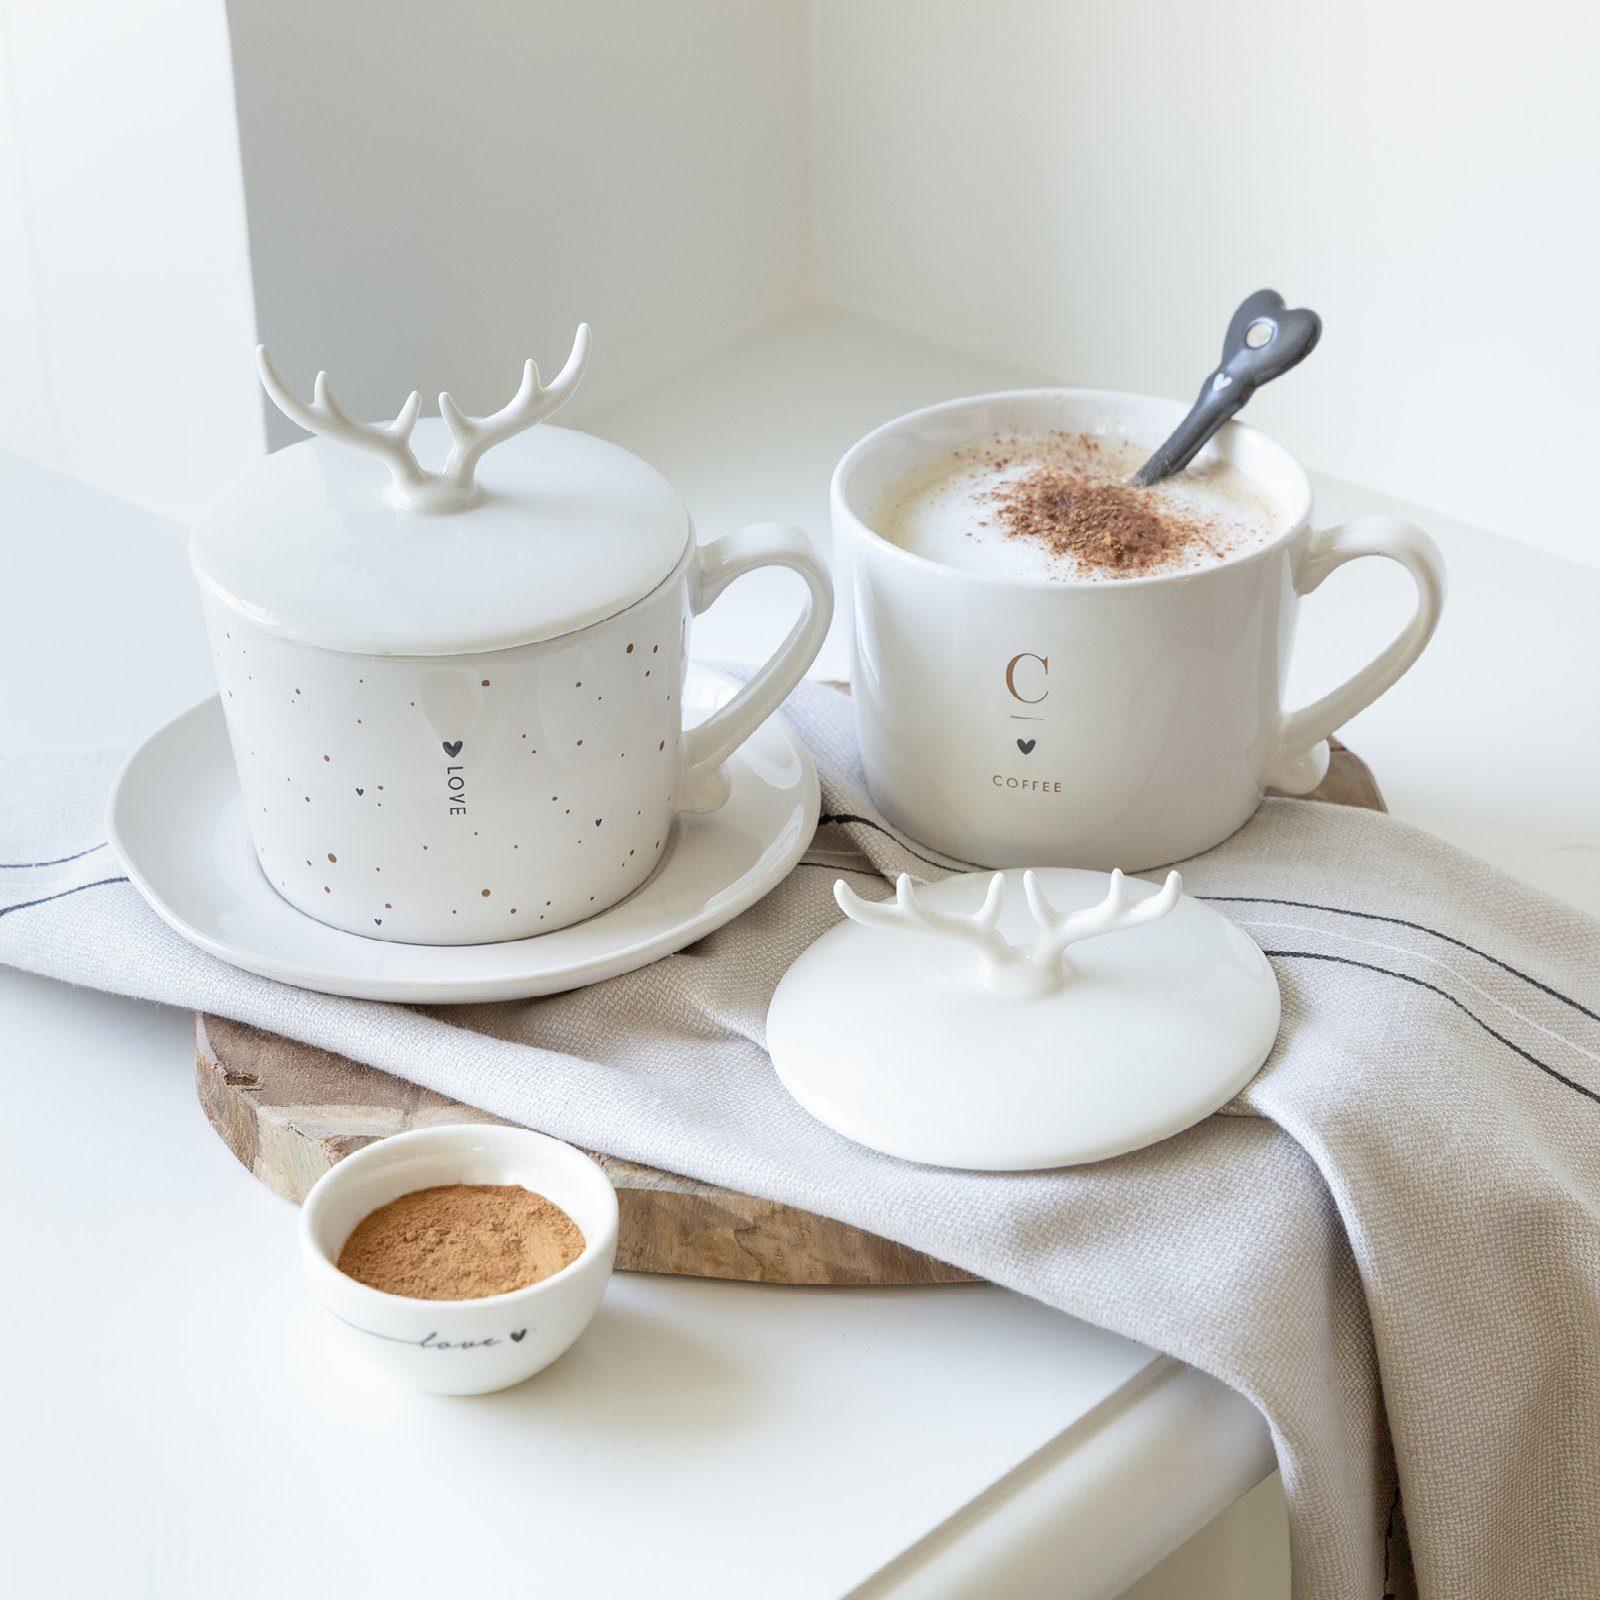 Bastion Collections Tasse Tasse karamell Coffee handbemalt mit (RJ/CUP 113 Keramik, Keramik BC), Henkel weiß